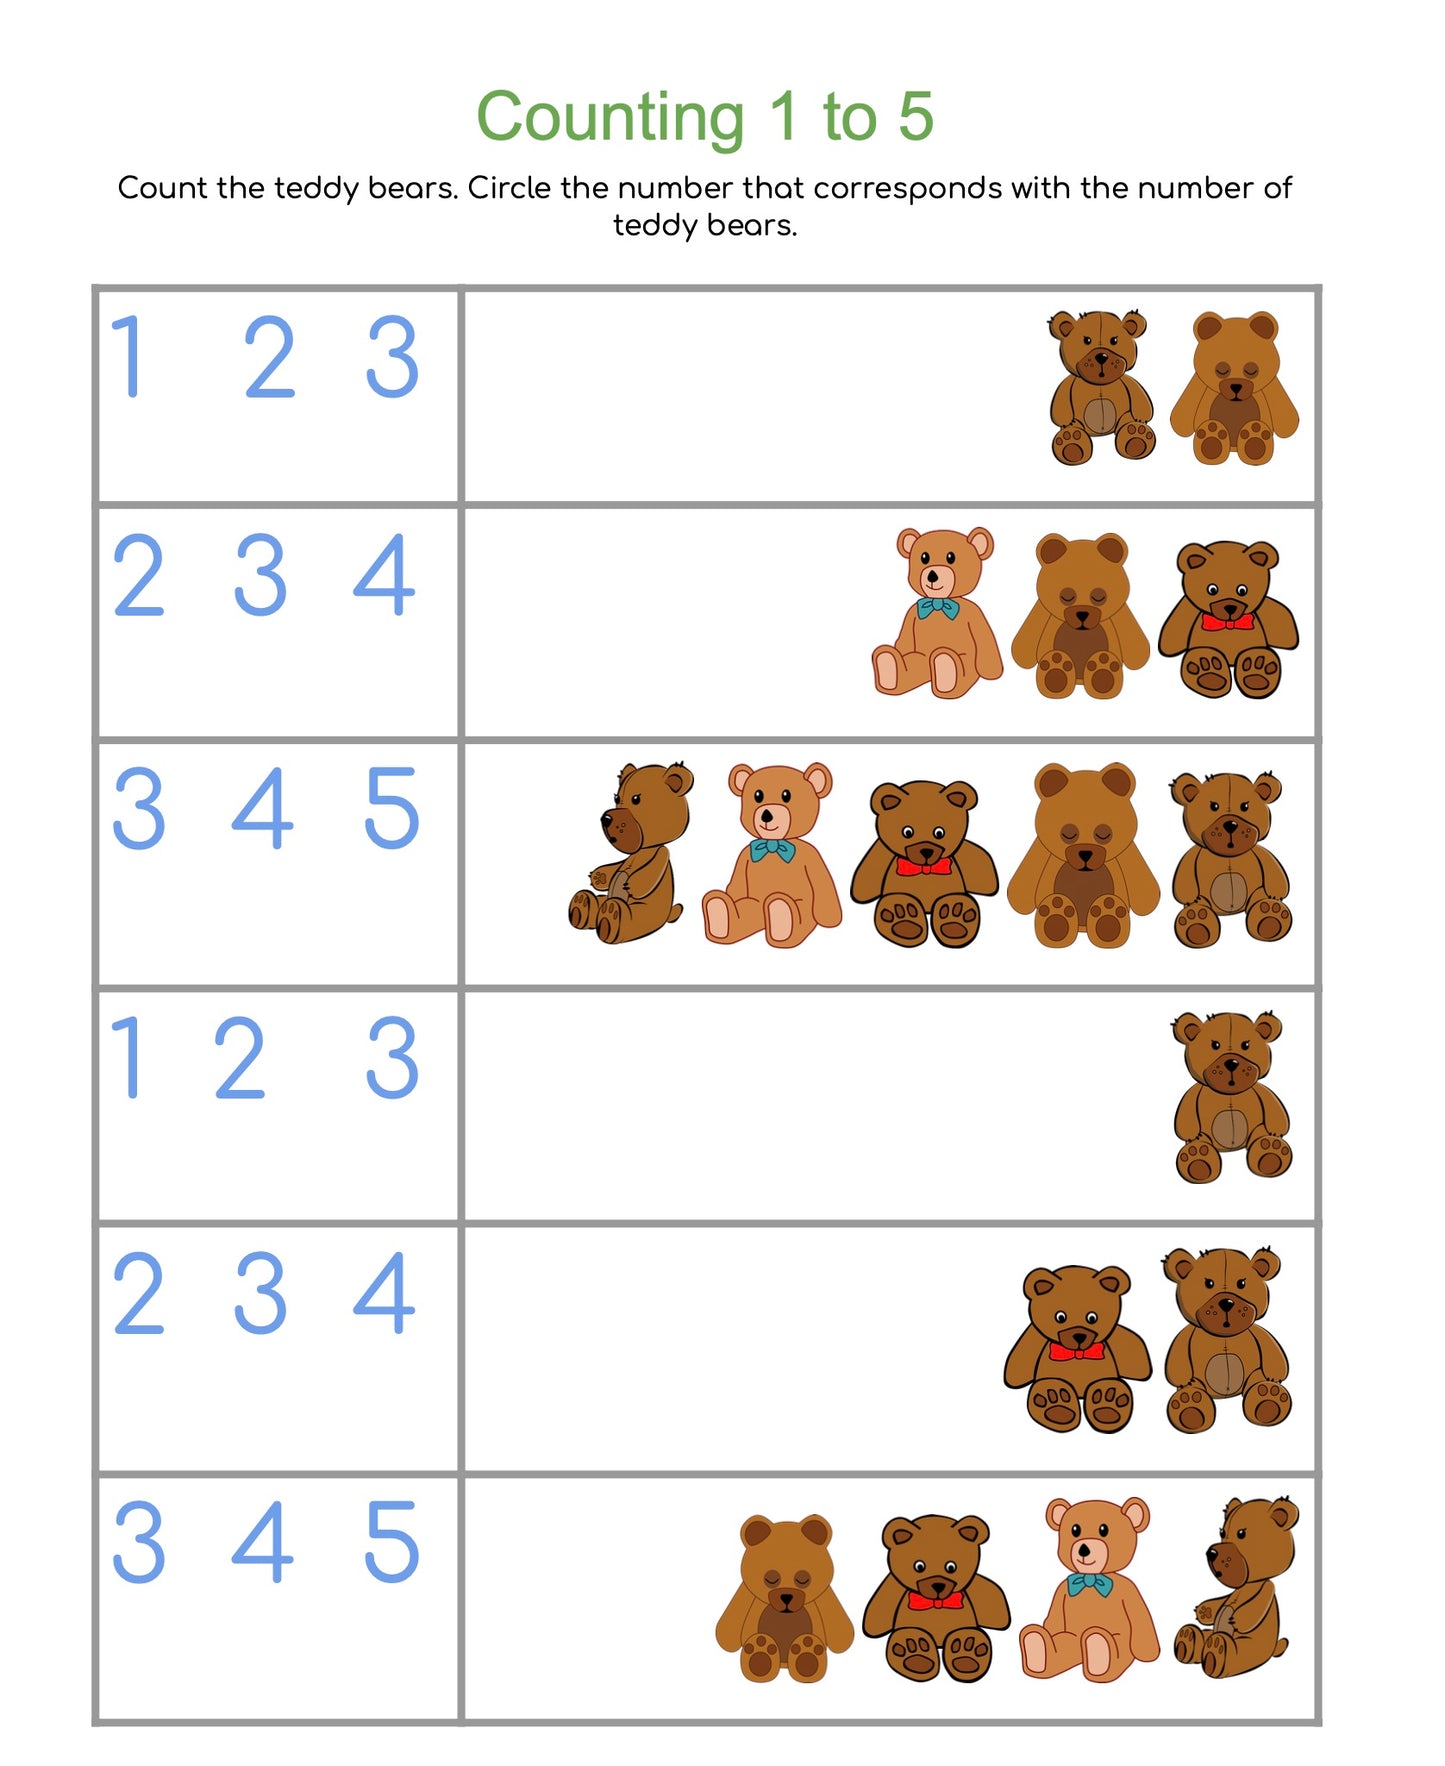 Picture Math: Preschool to Kindergarten Math for Fun